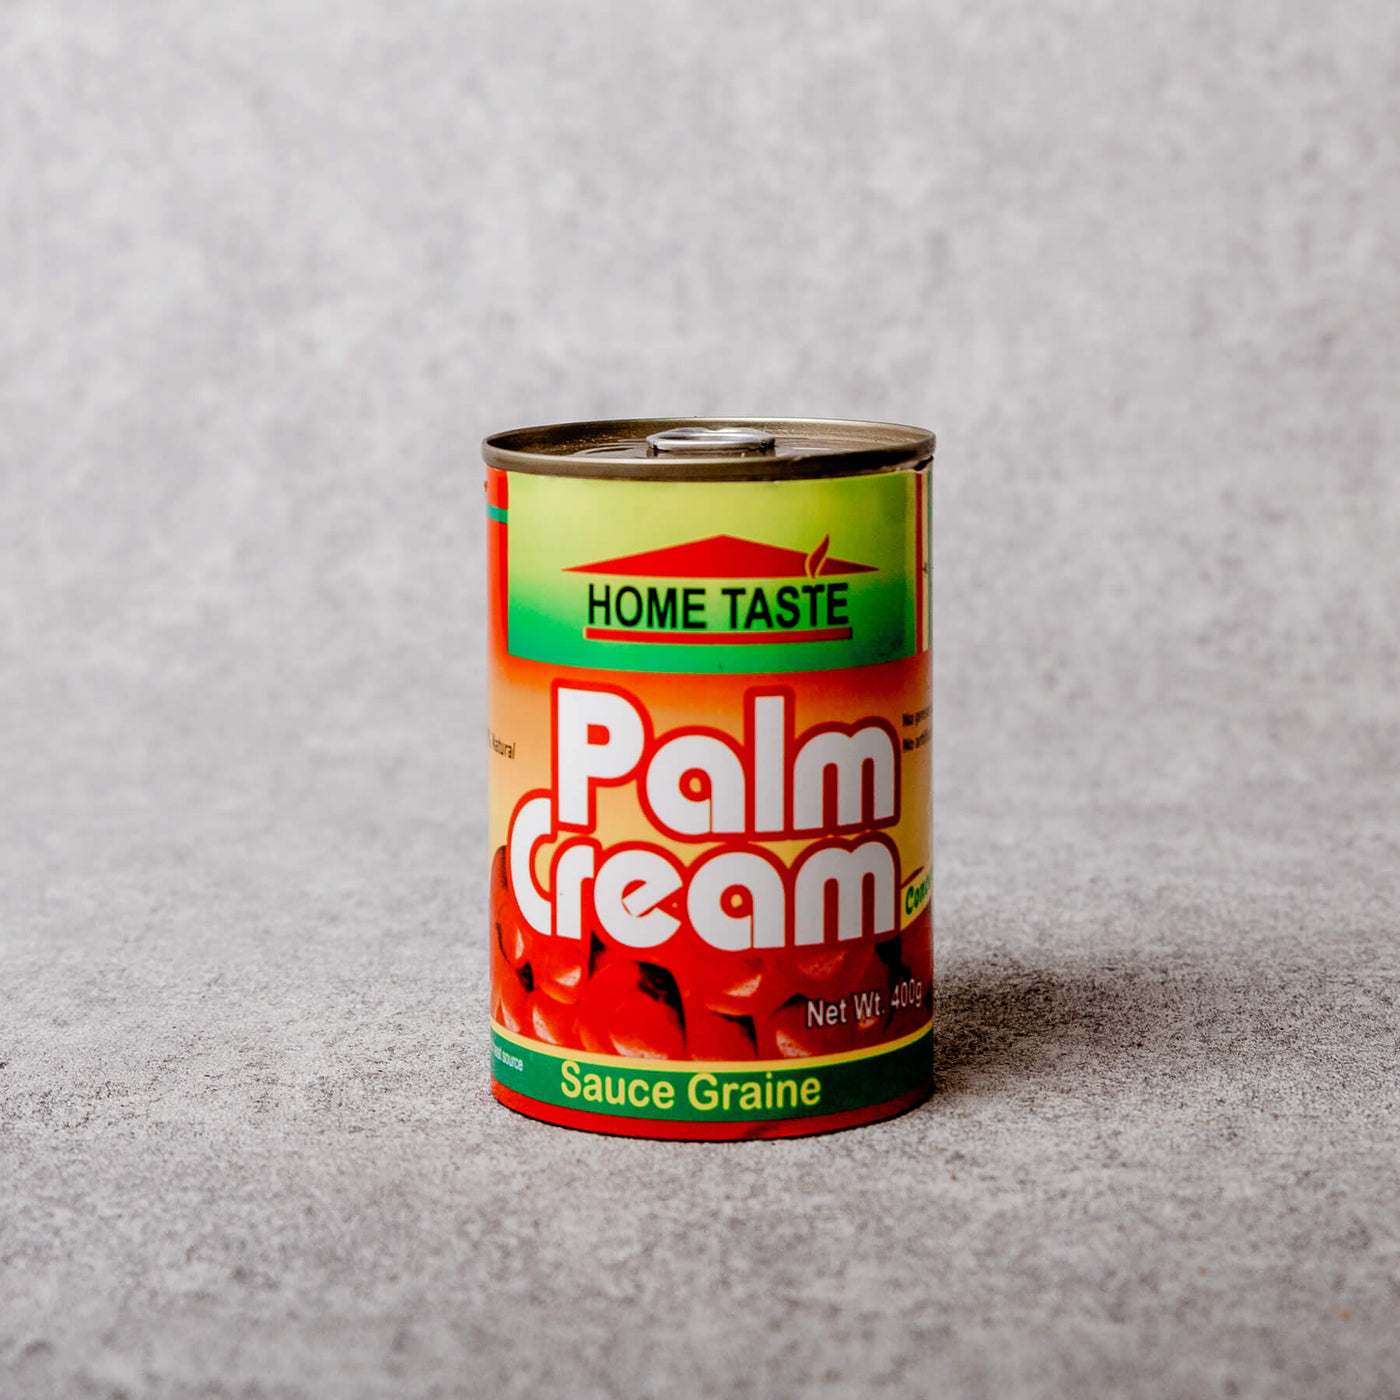 Home Taste - Palm Cream